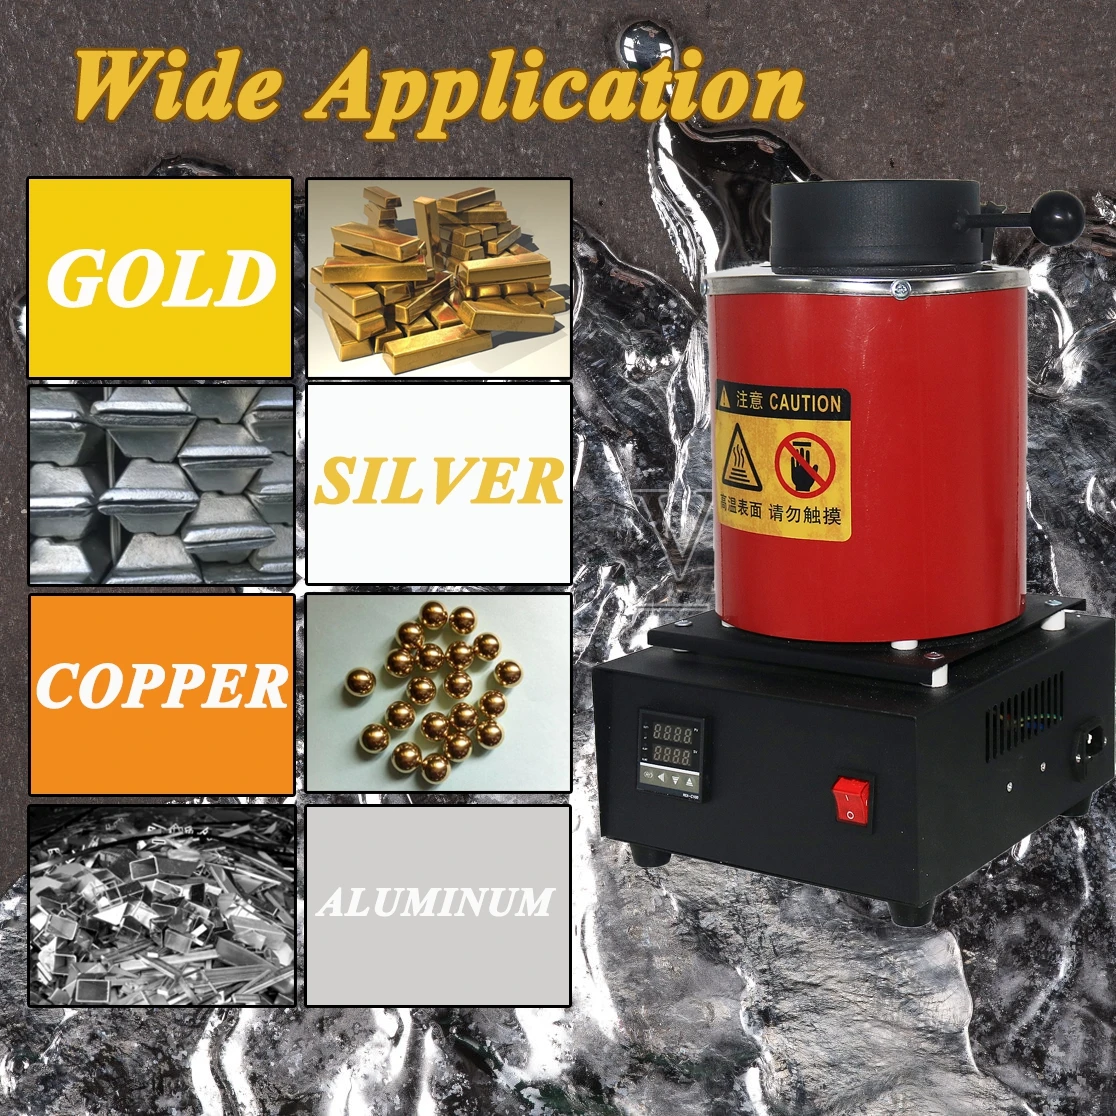 2kg Digital Electric Gold  Melting Furnace with Graphite Crucible for Melt Scrap, Silver, Gold, Copper,Refining Casting Furnace